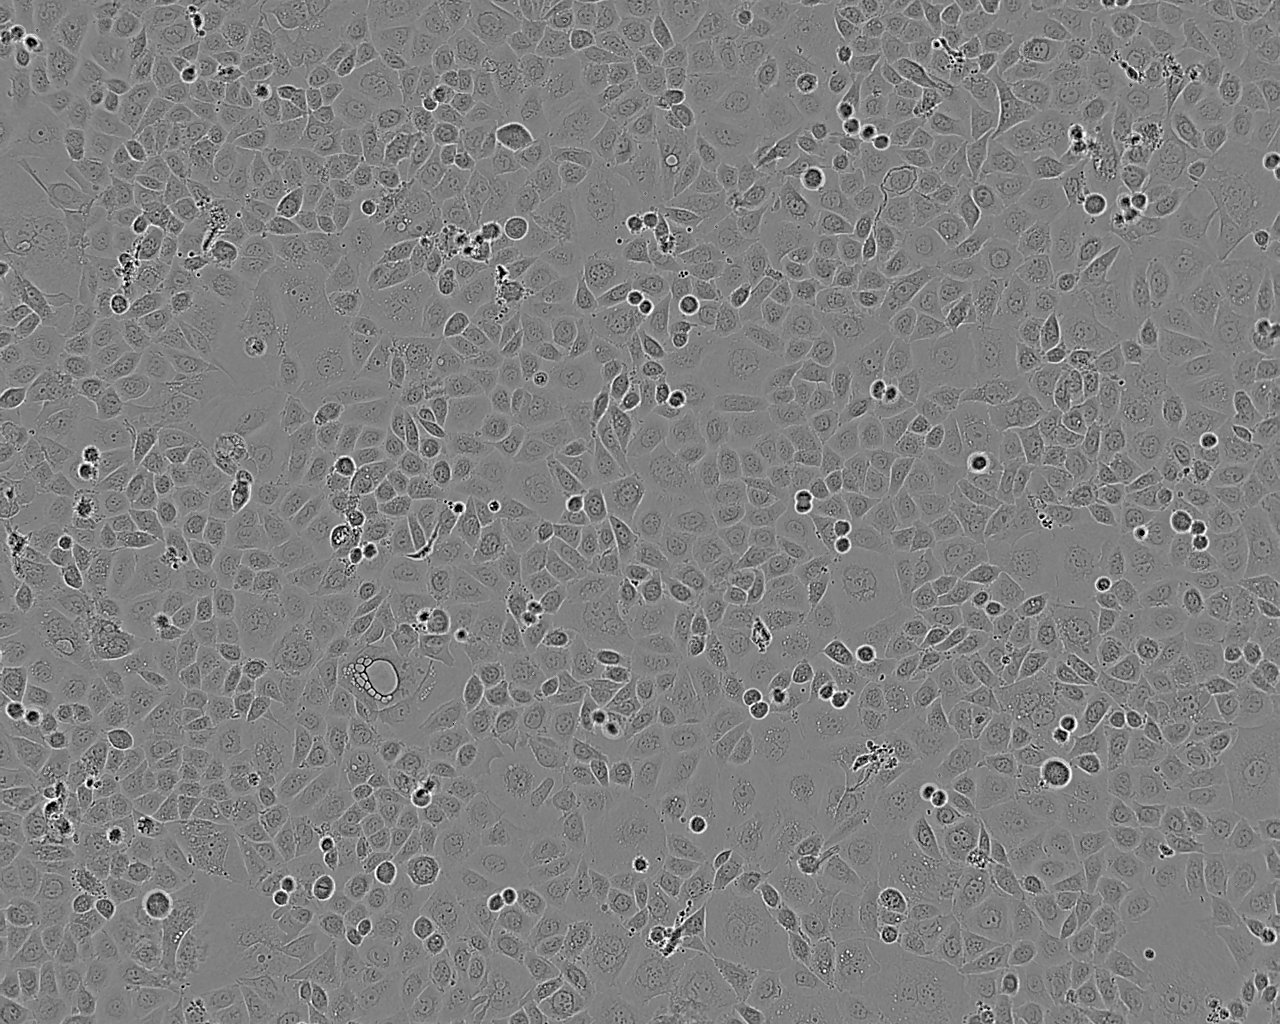 BIU-87 epithelioid cells人膀胱癌细胞系,BIU-87 epithelioid cells